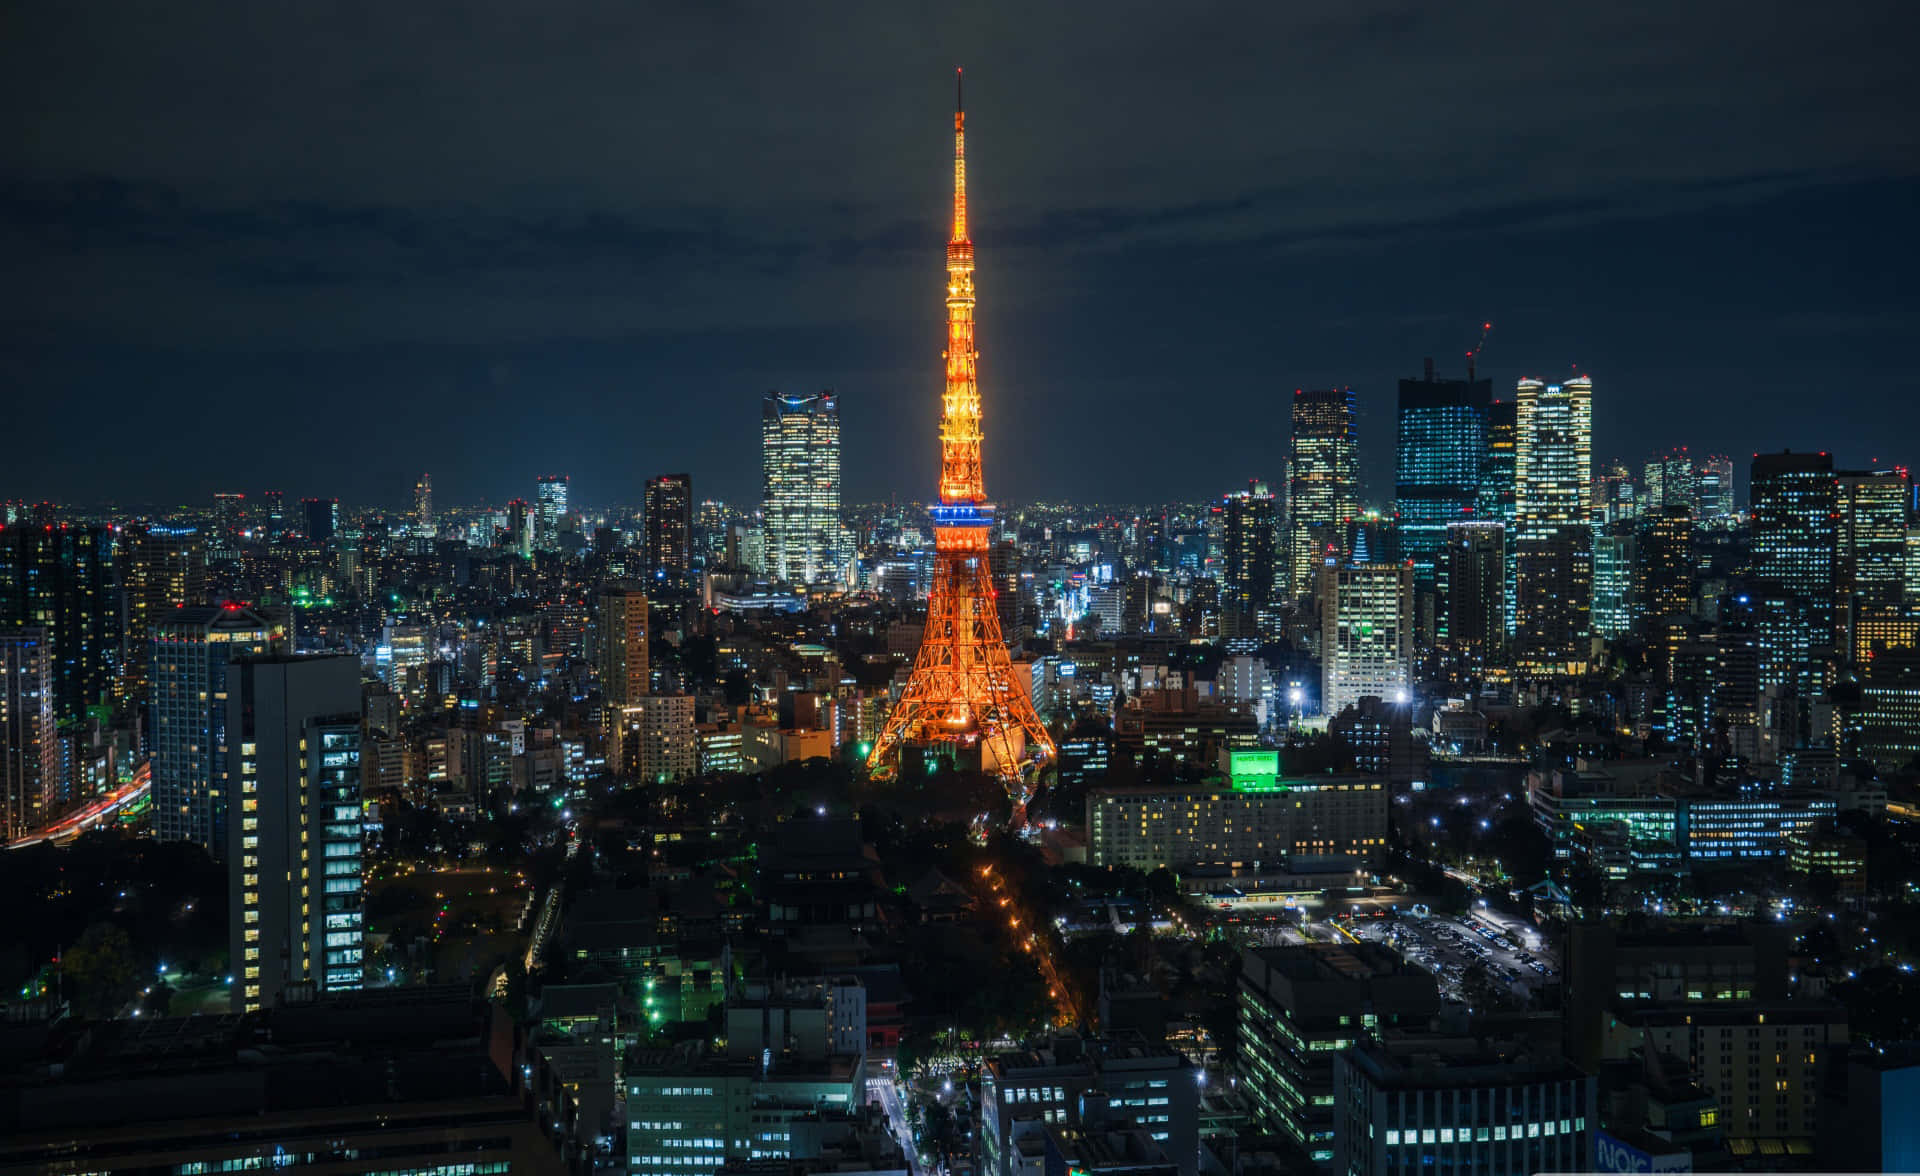 Tokyobaggrund I Klart, Gul Farve. Tokyo Tower.